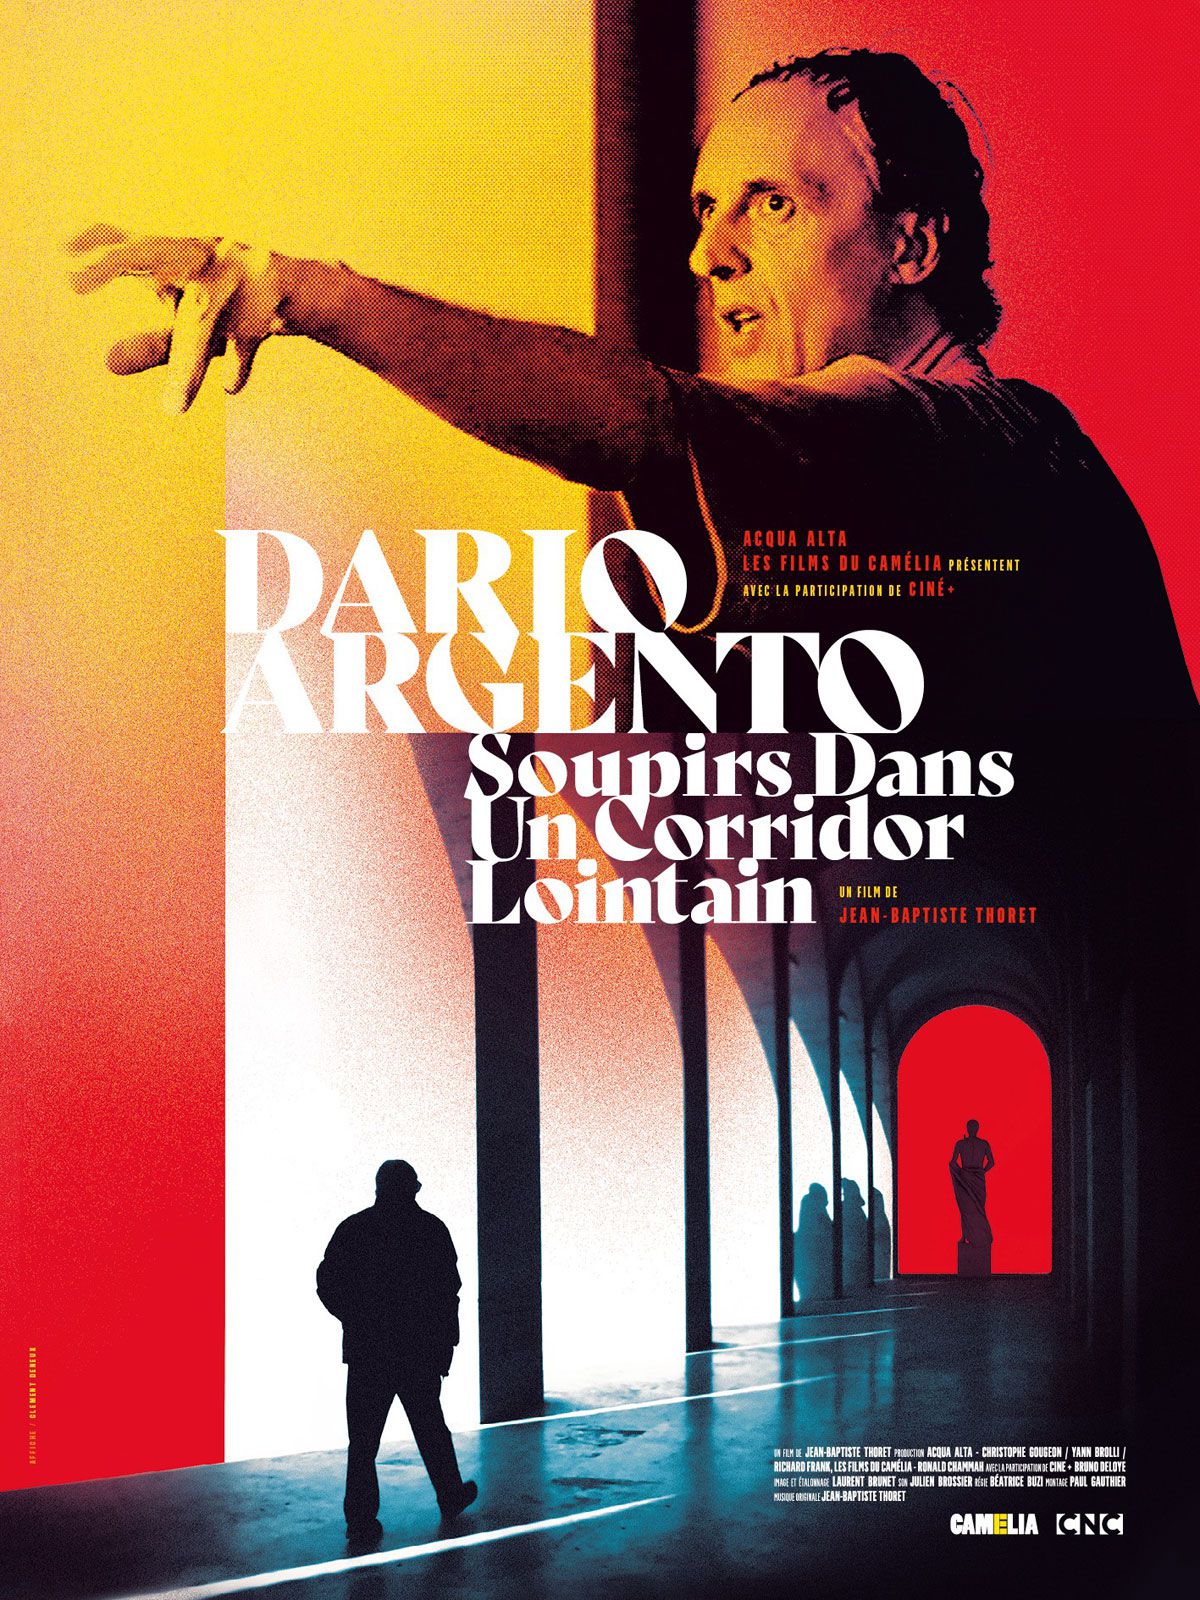 Dario Argento - Soupirs dans un corridor lointain - Documentaire (2019) streaming VF gratuit complet